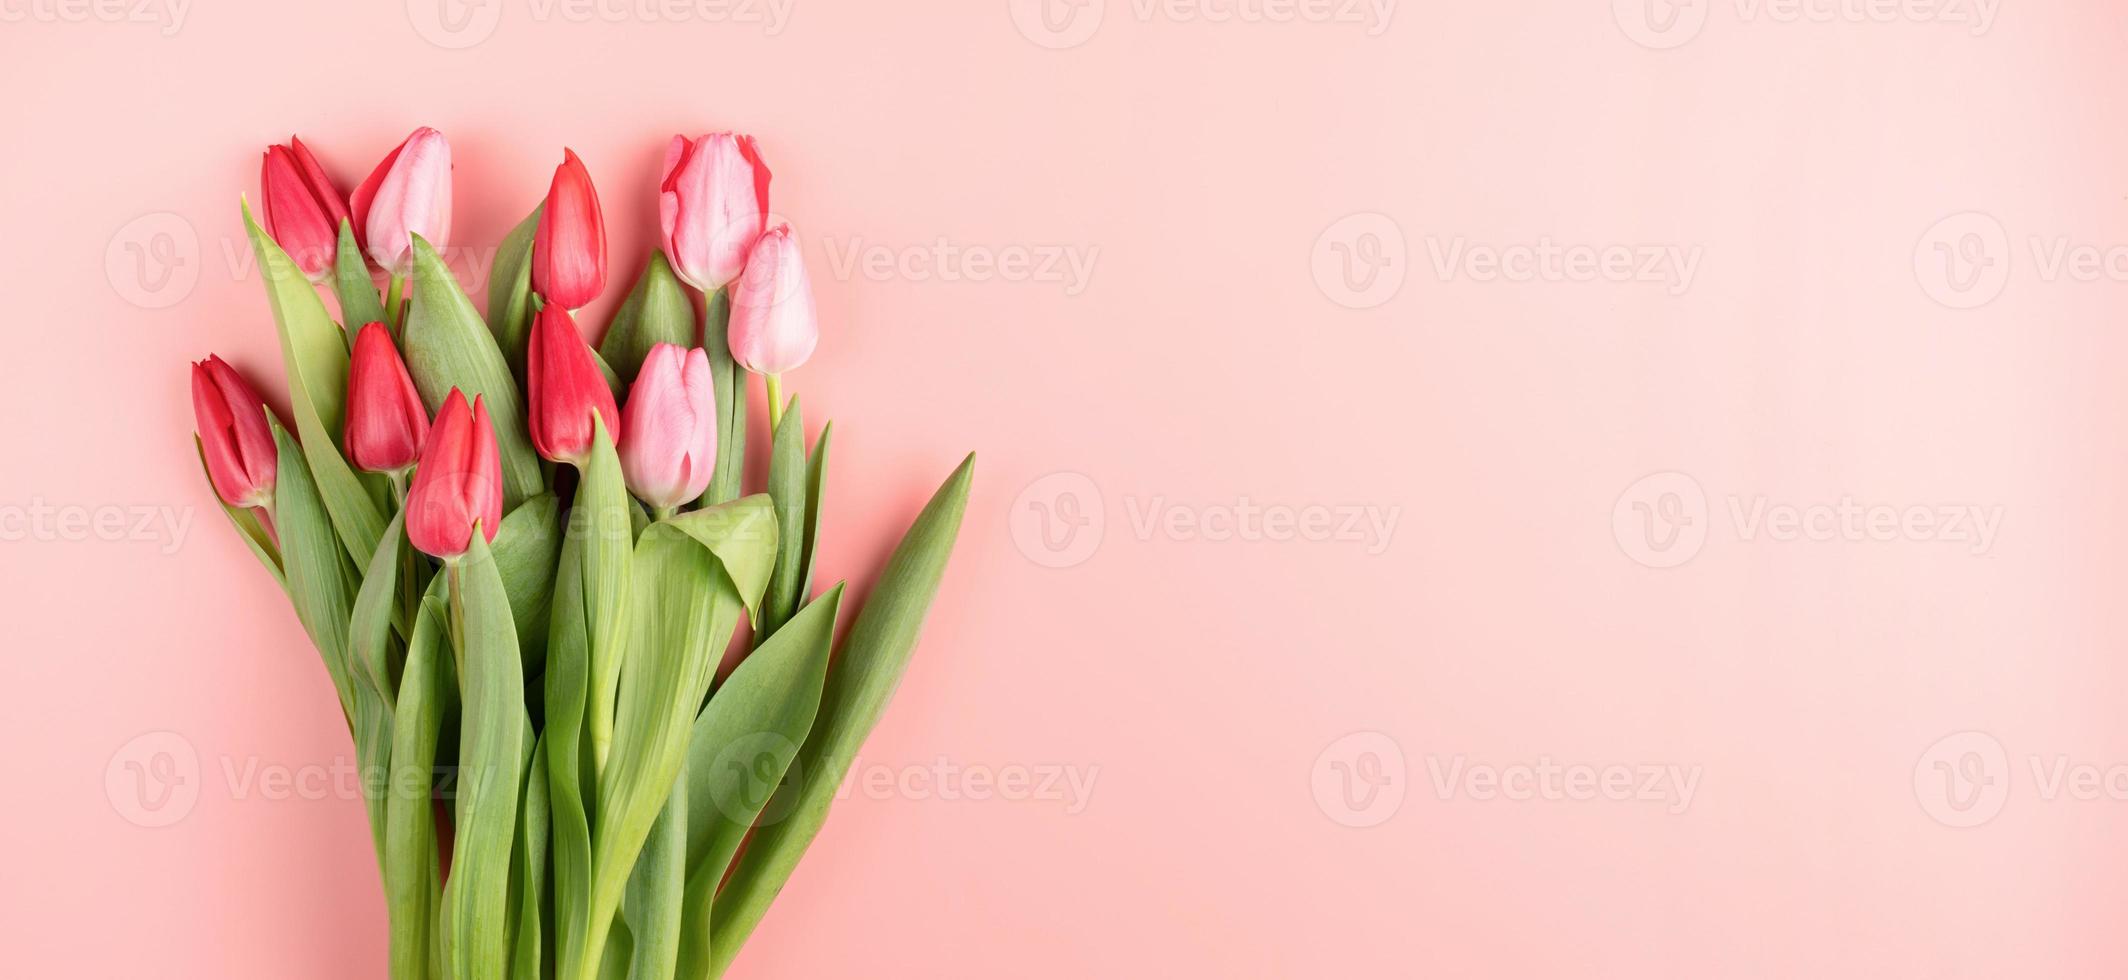 rode en roze tulpen op roze effen achtergrond bovenaanzicht plat lag foto